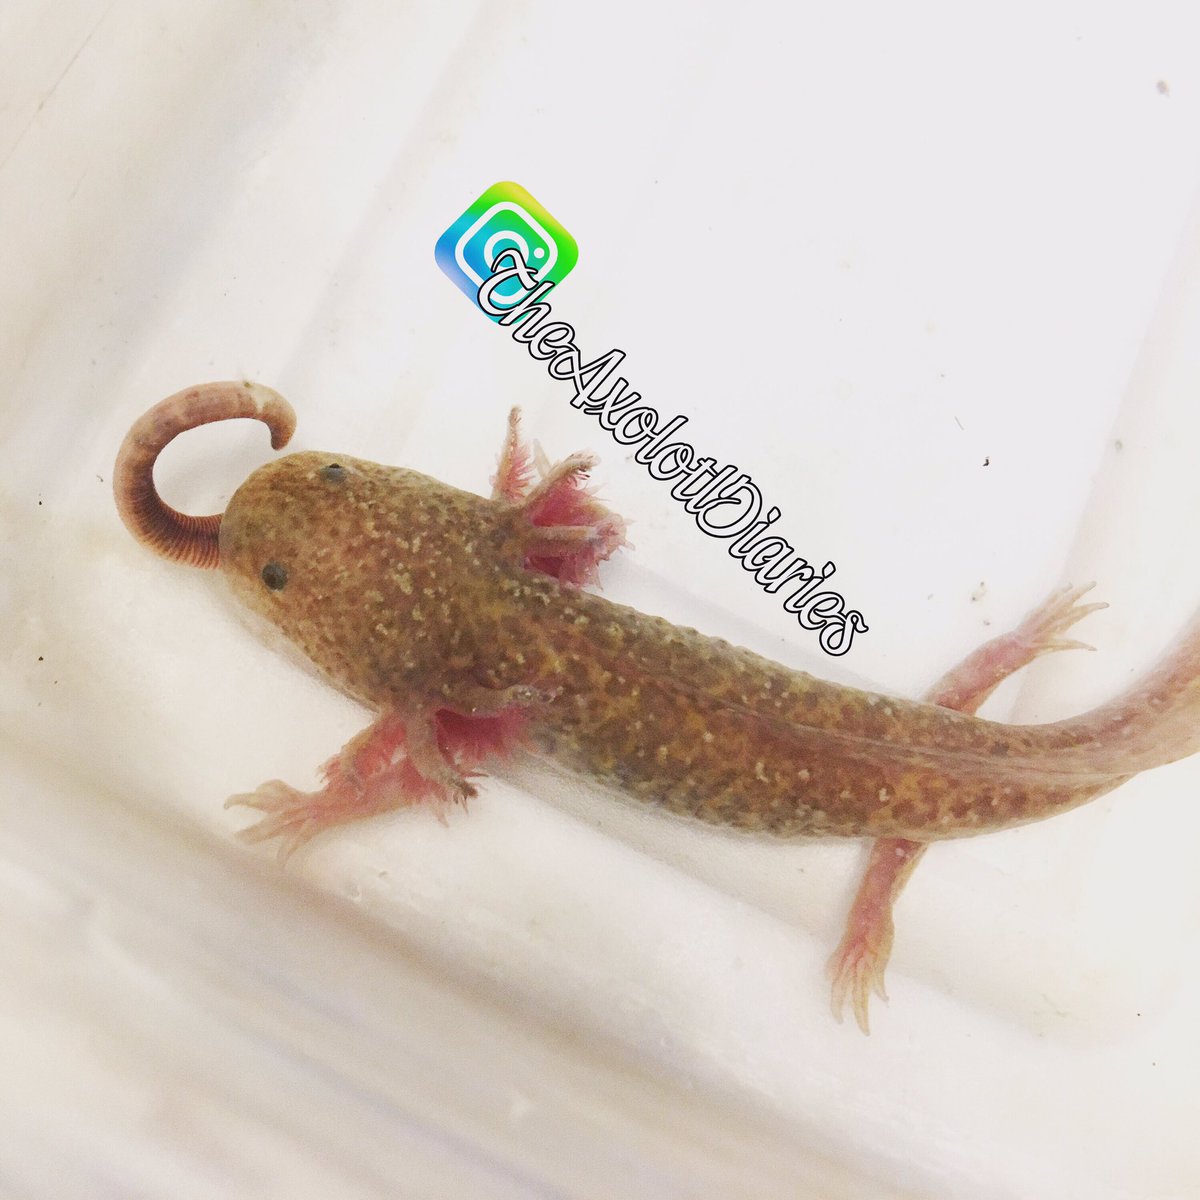 #CooperTheCopper enjoying his wormie.❤️
#Axolotl #AxolotlDiaries #Salamander #PetsofTwitter #FollowMe #ImNewHere #axolotllove